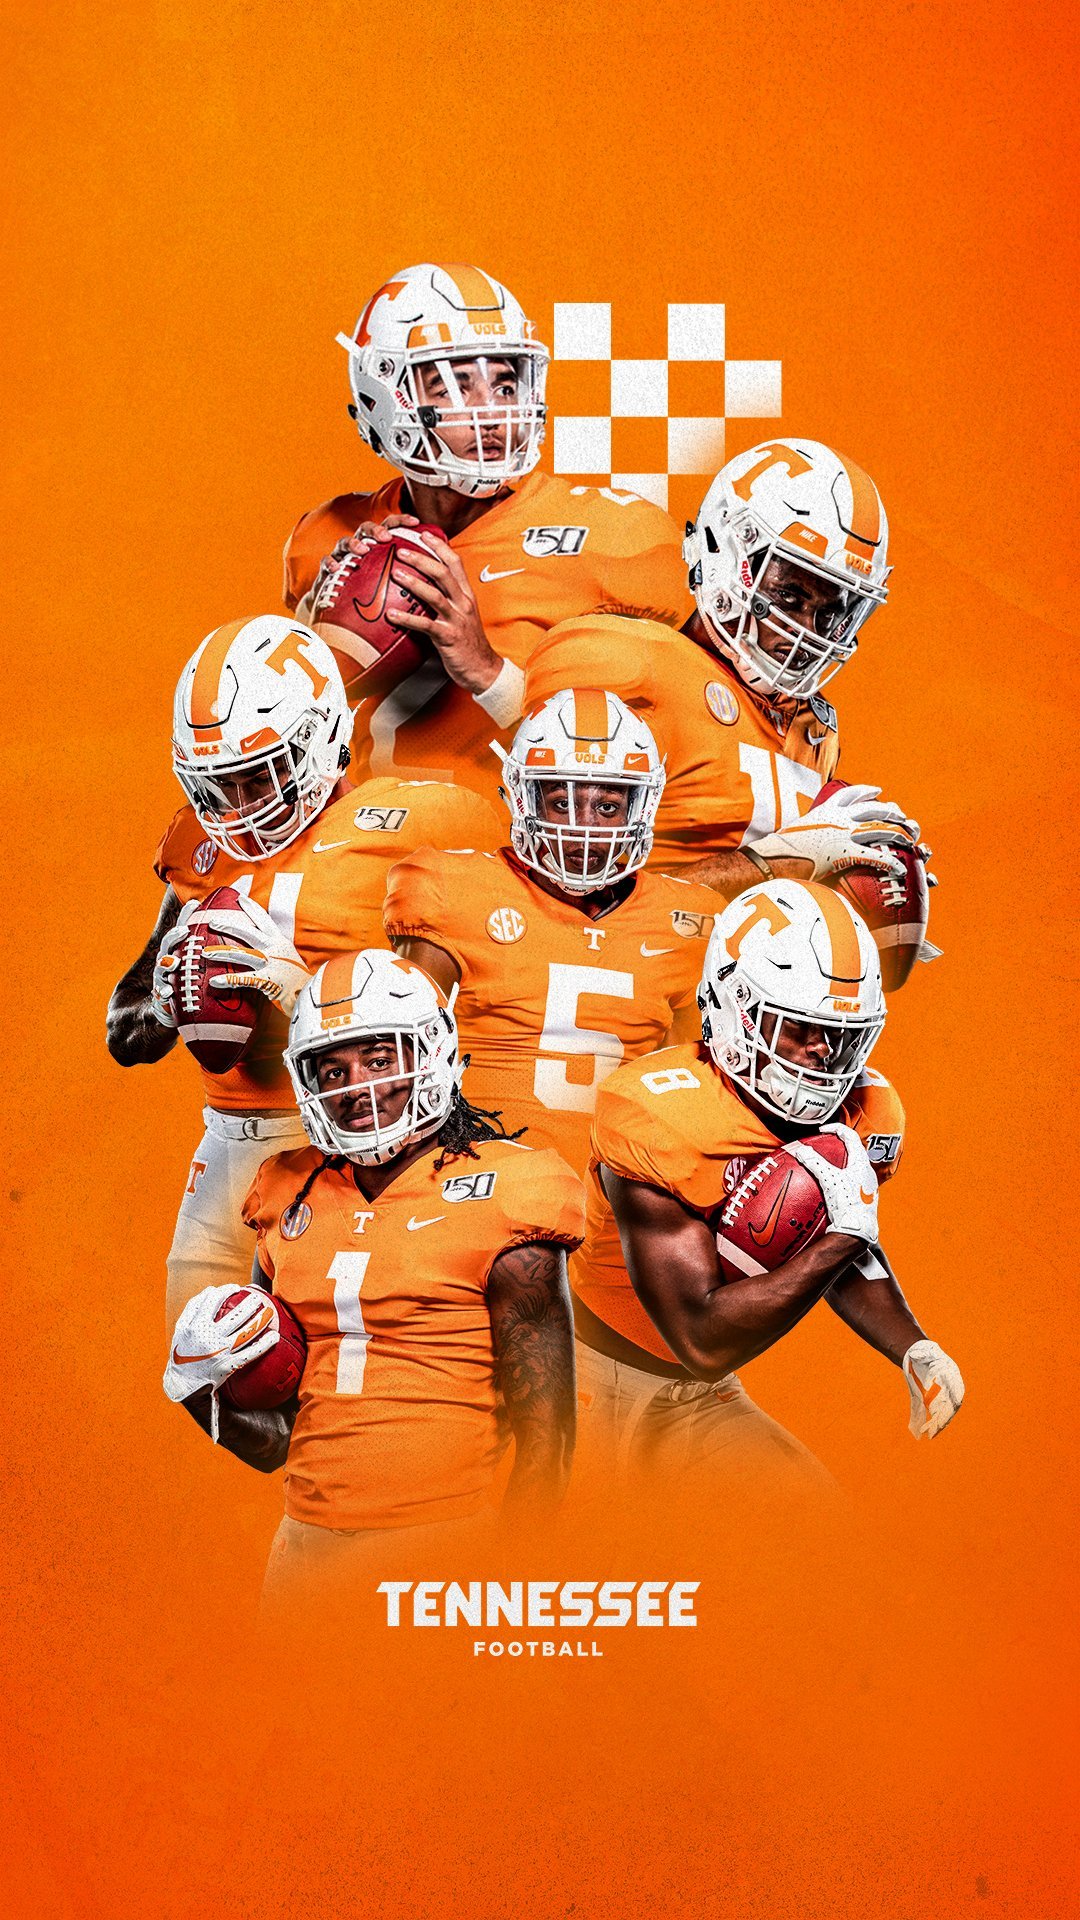 Tennessee Football? Ready. Defense? Ready. Your wallpaper? Now ready. #PoweredByTheT